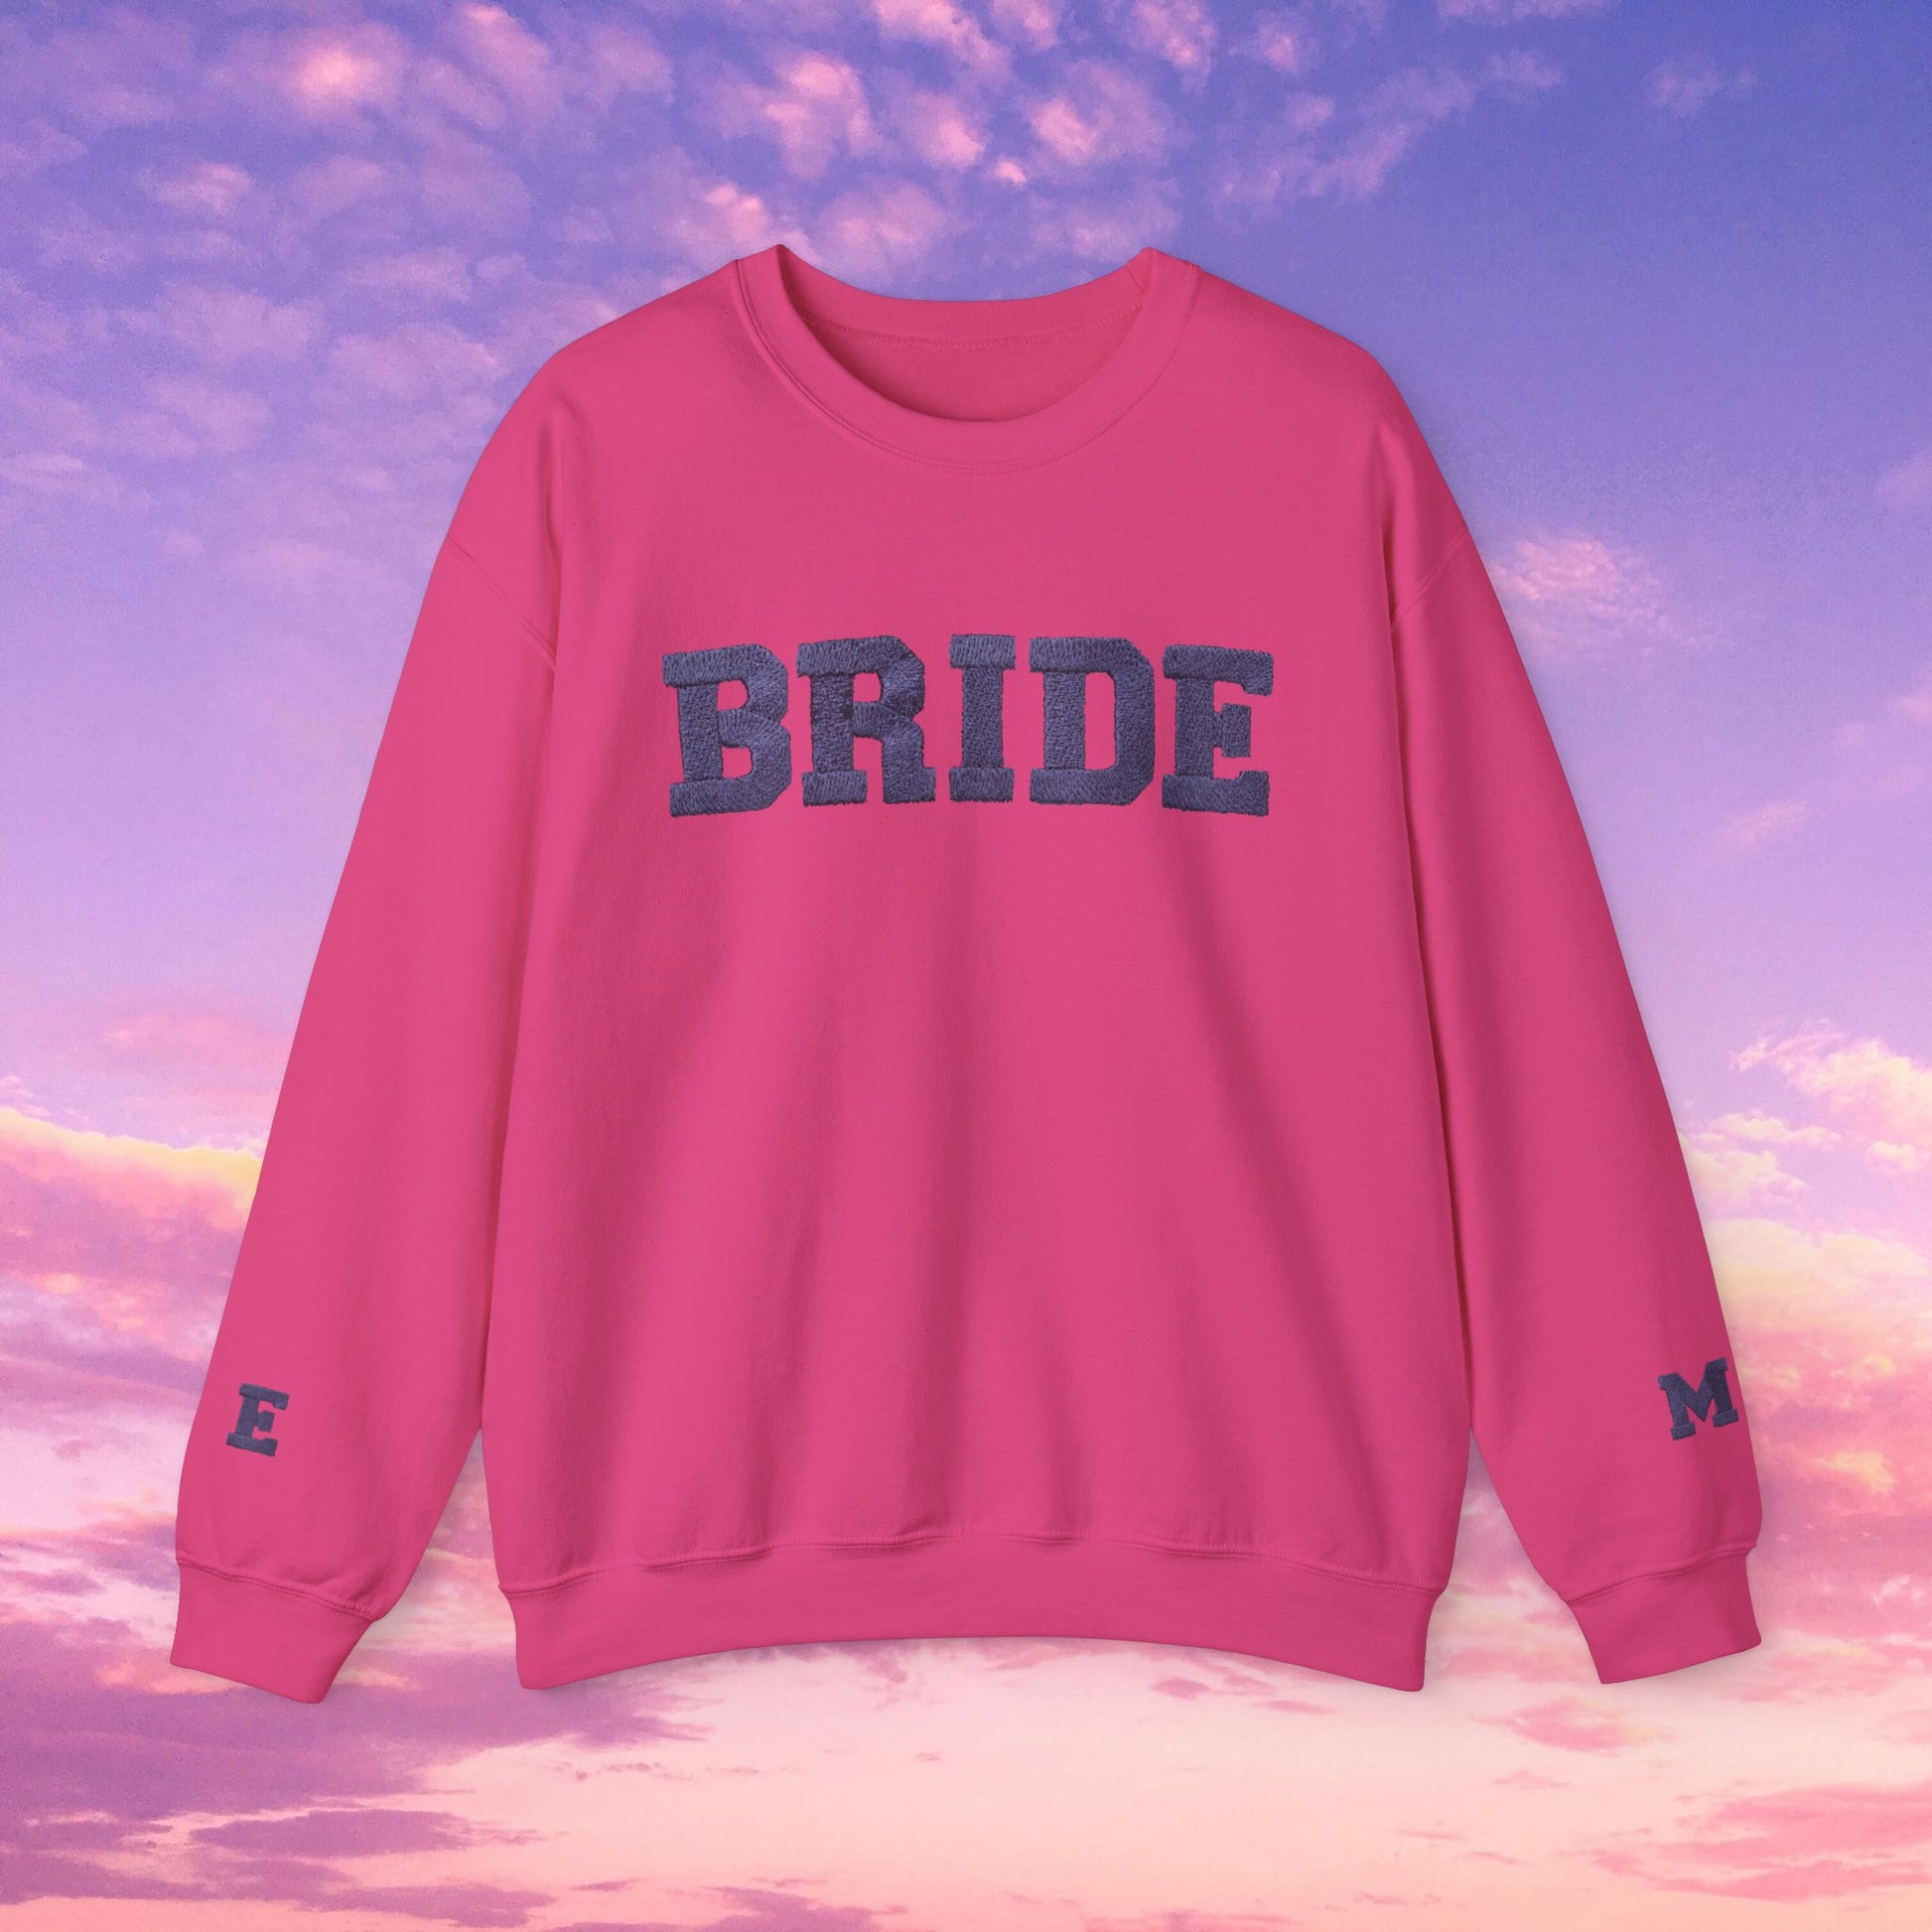 Bride Sweatshirt With Personalized Initials On Sleeves Sweatshirt Brides by Emilia Milan 